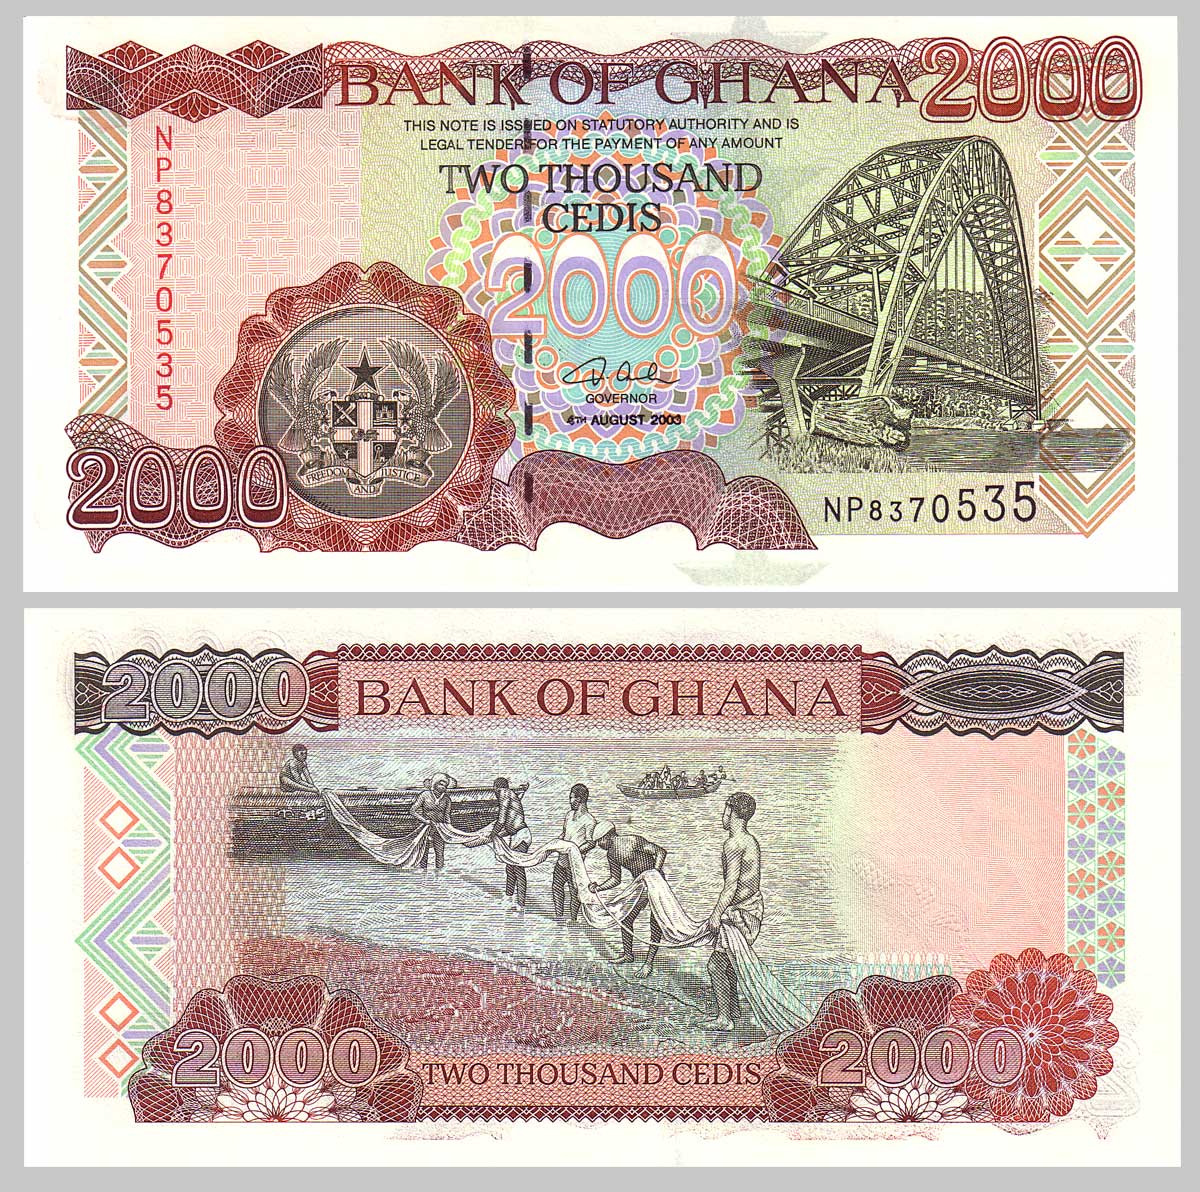 Ghana forex bureau rates today